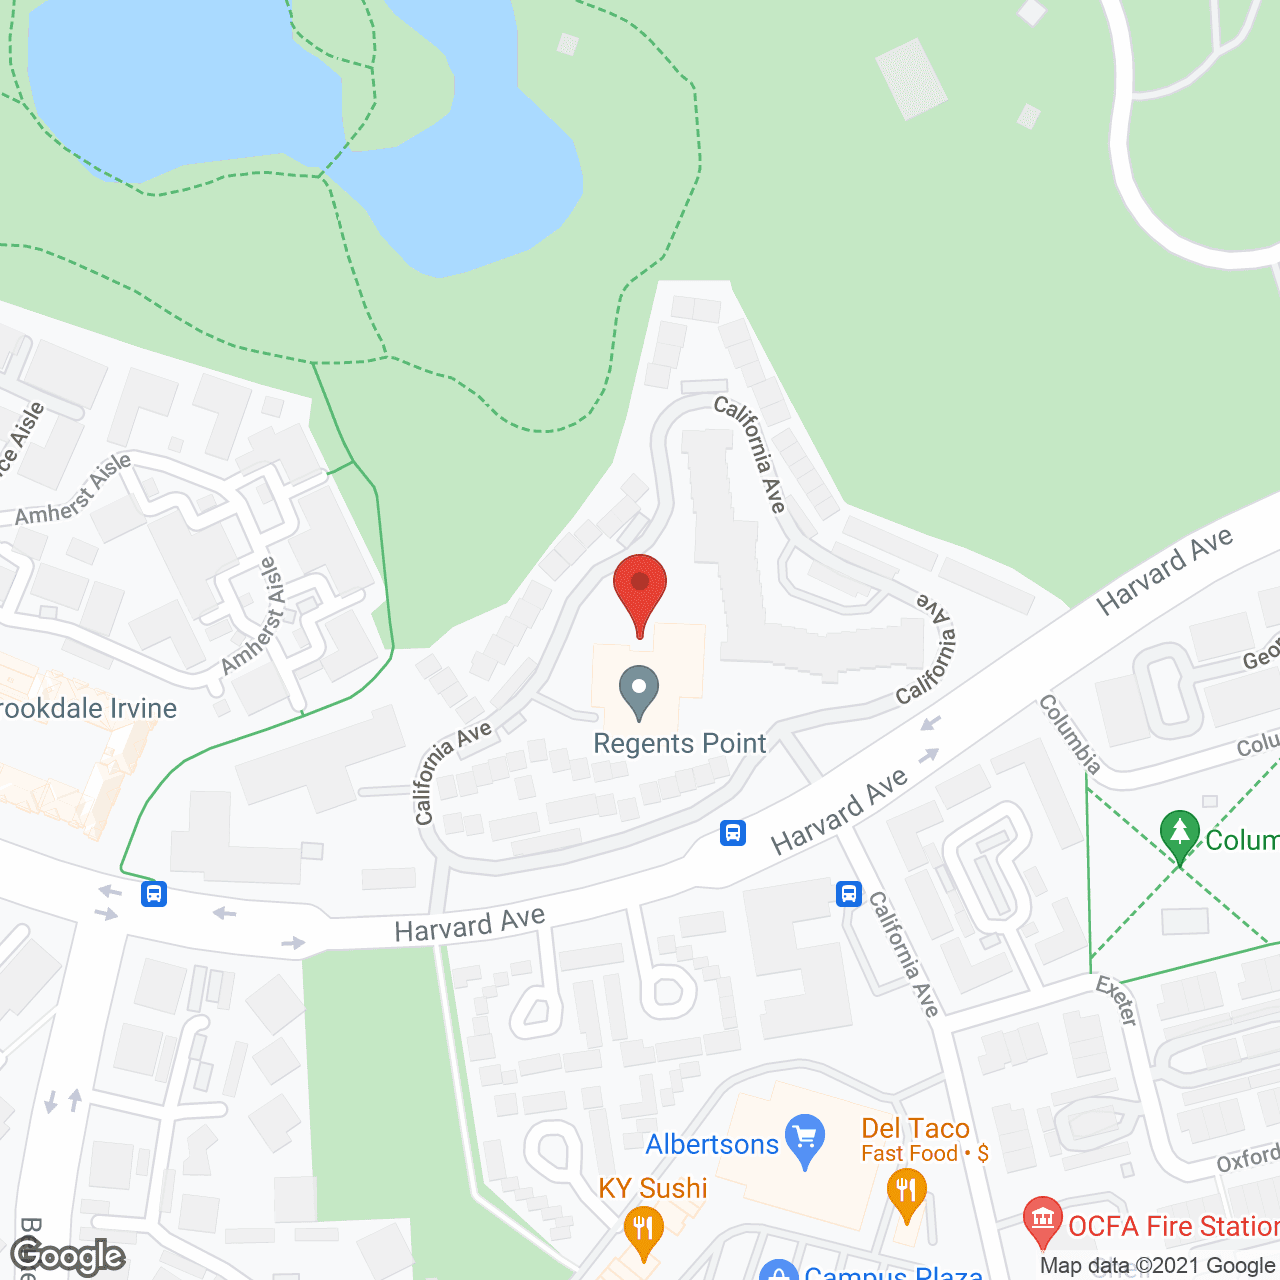 Regents Point in google map